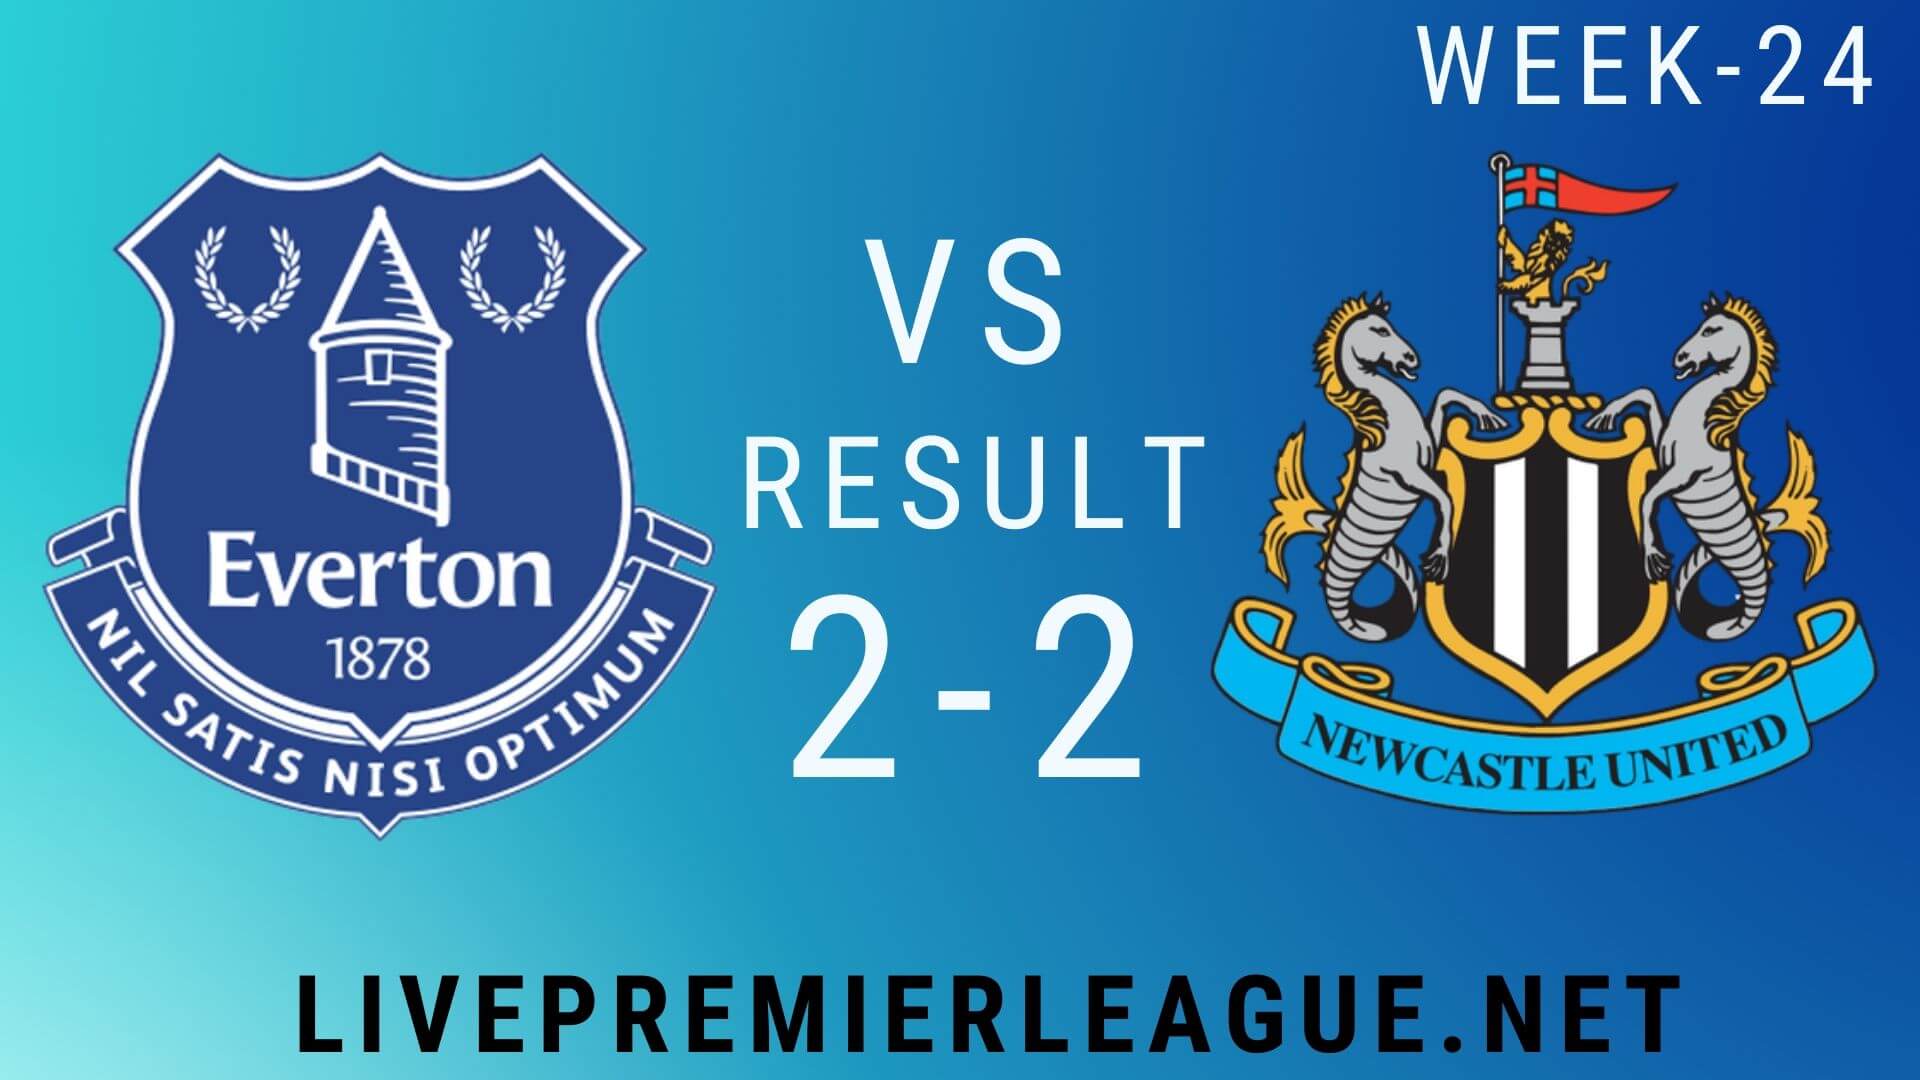 Everton Vs Newcastle United | Week 24 Result 2020